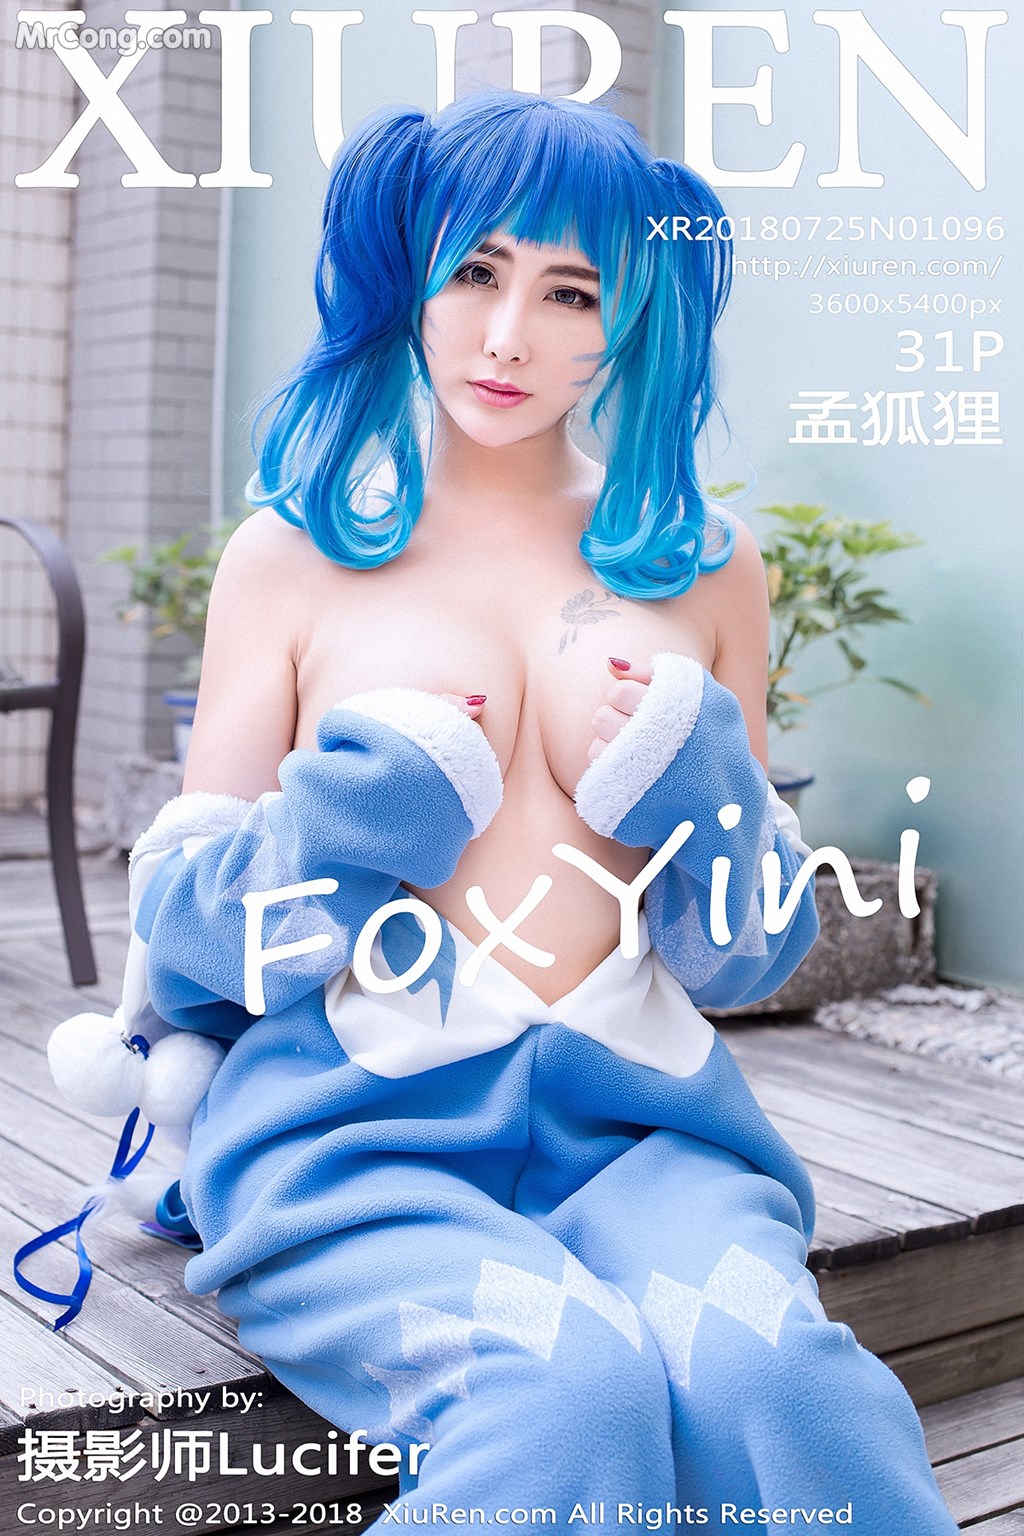 [XIUREN] No.1096 FoxYini孟狐狸 Cover Photo